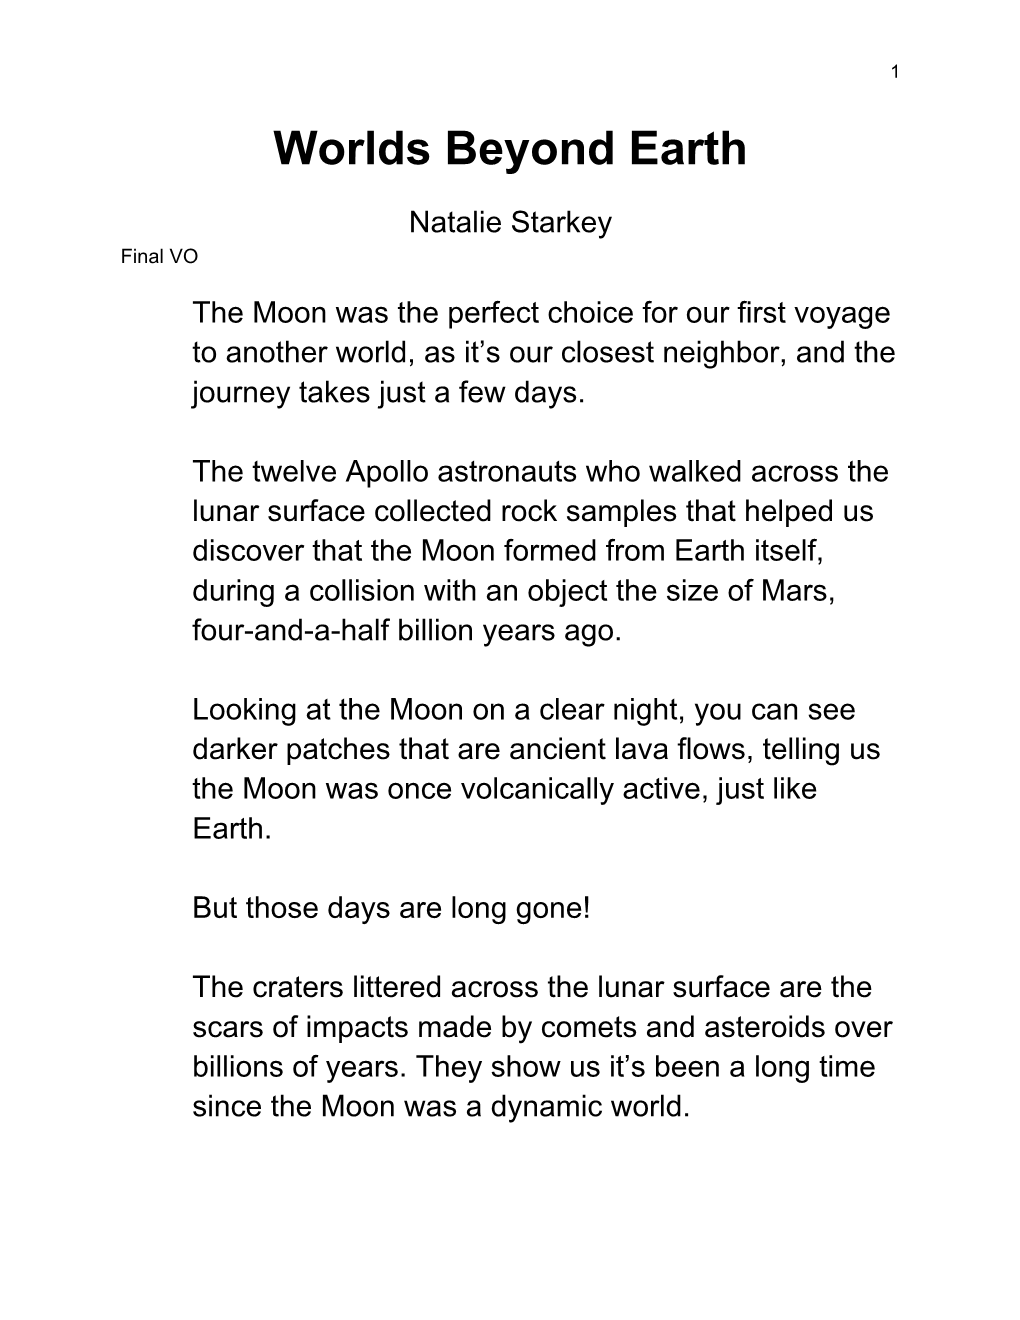 Worlds Beyond Earth Large-Print Transcript